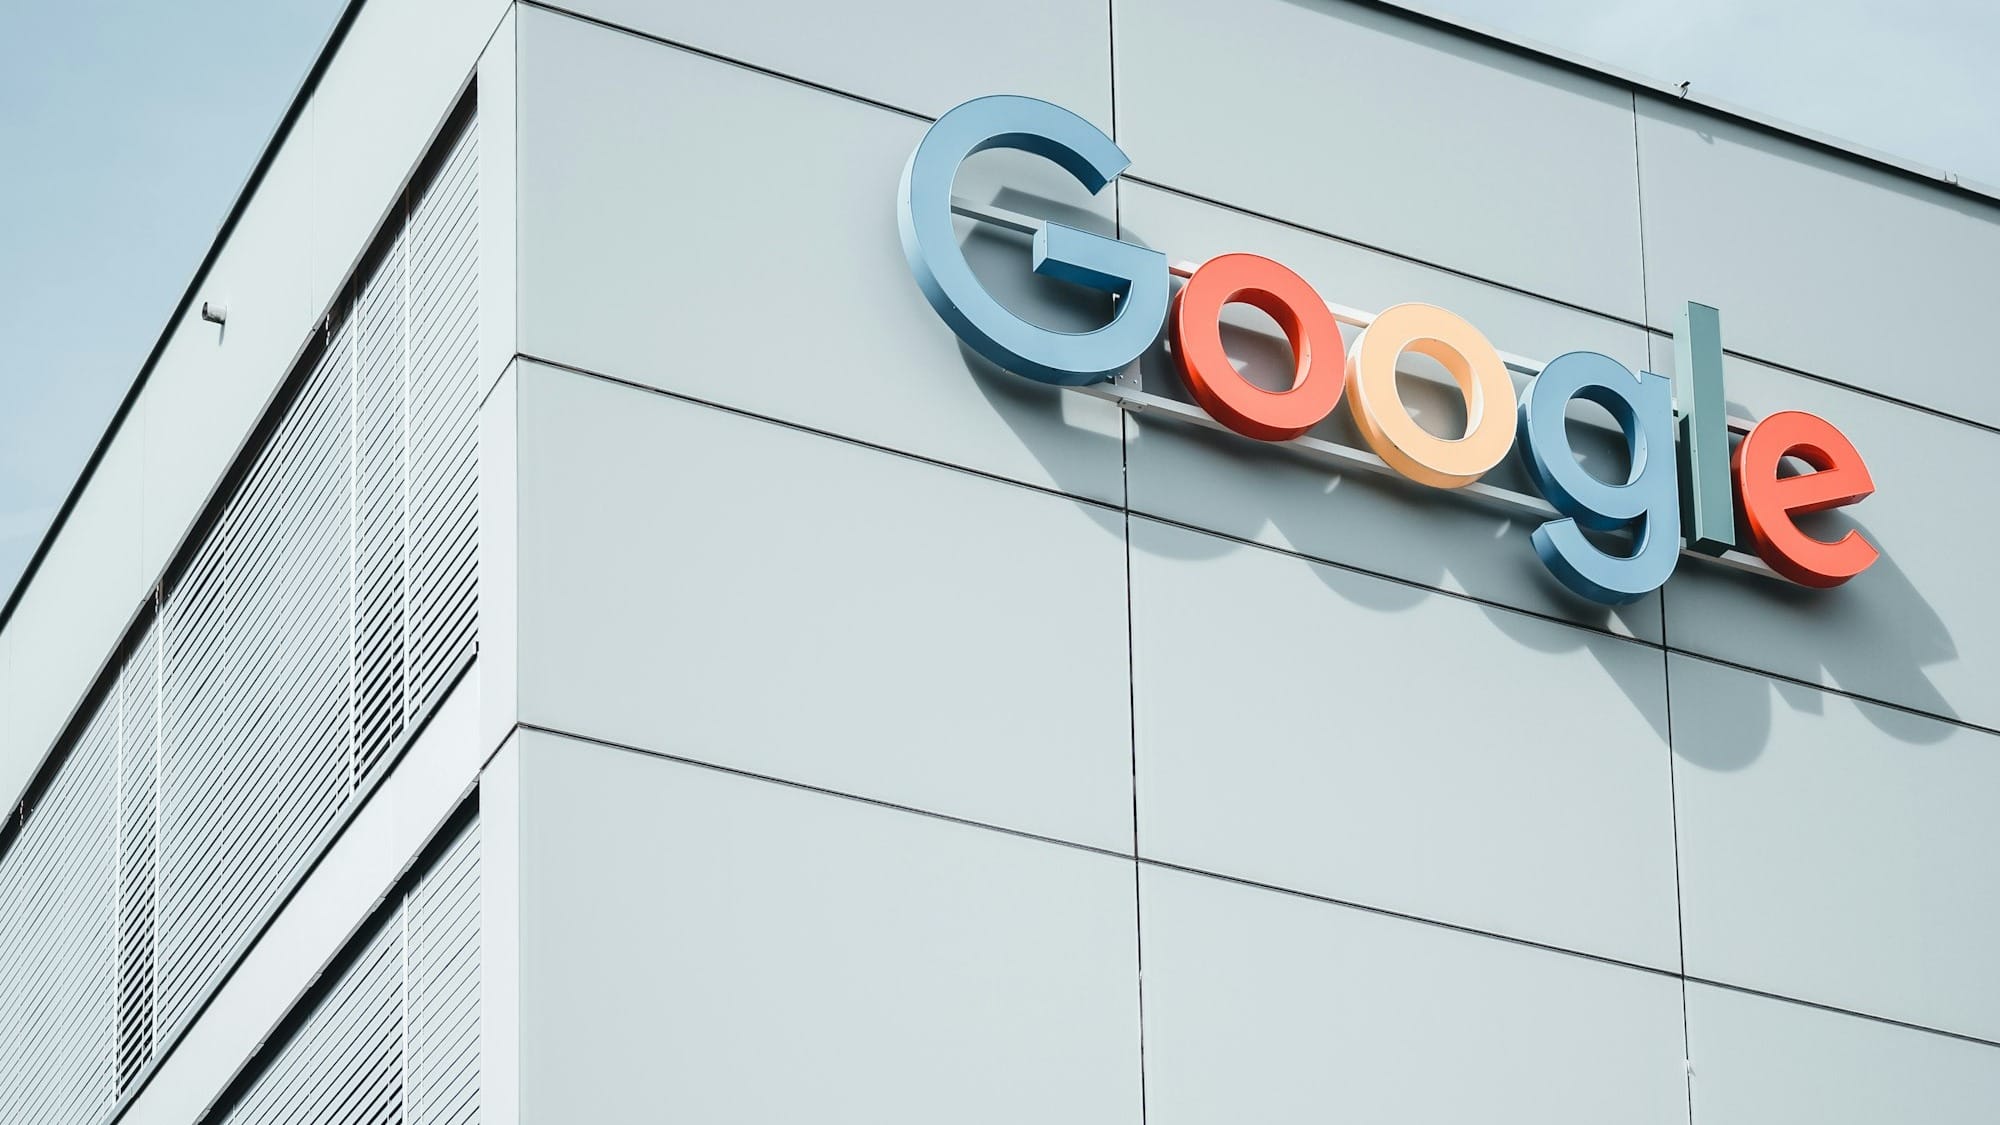 Alphabet, Google’s Parent Company, back in $2 Trillion Valuation